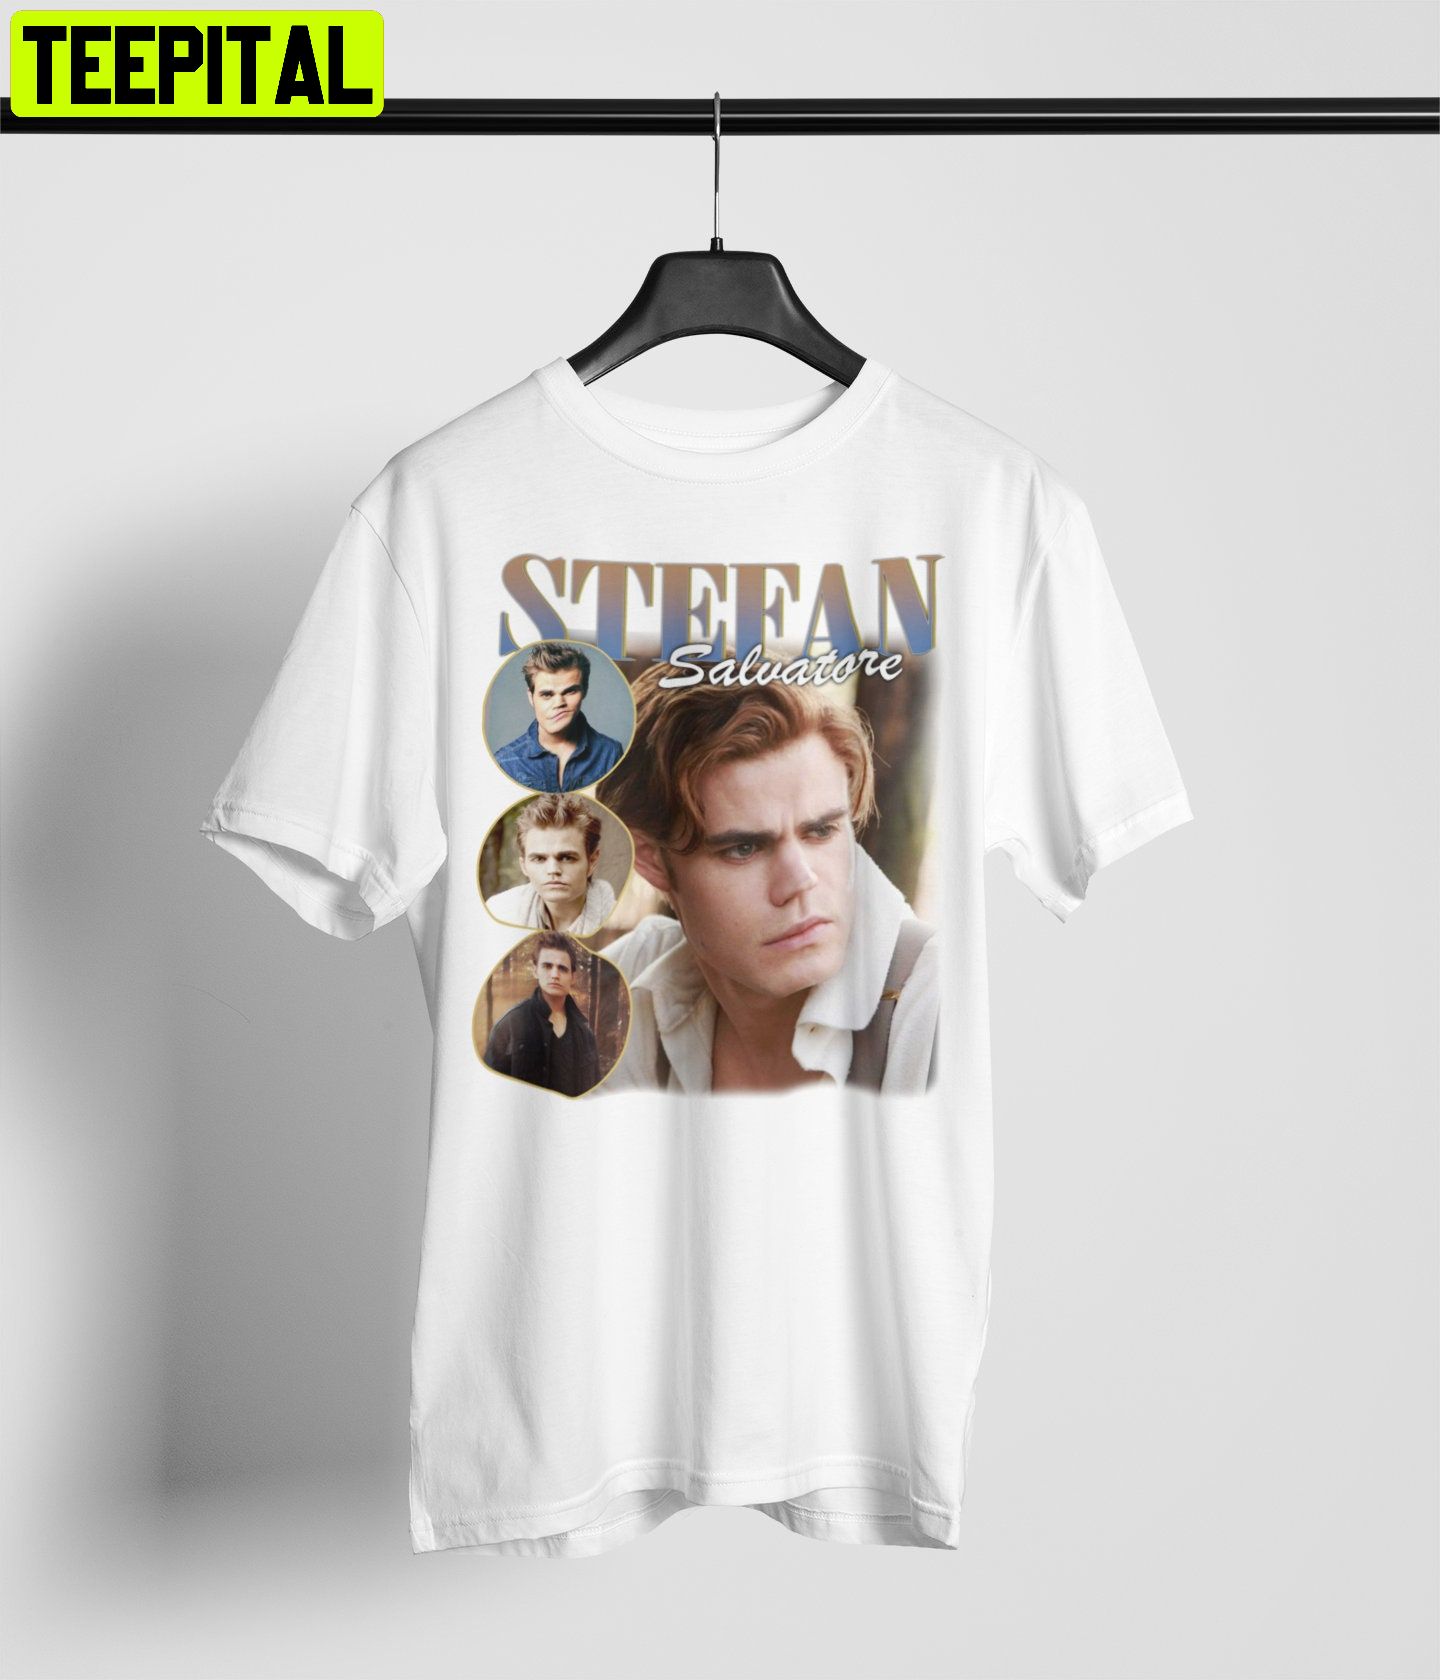 Stefan Salvatore Vintage Inspired 90s Rap Unisex T-Shirt